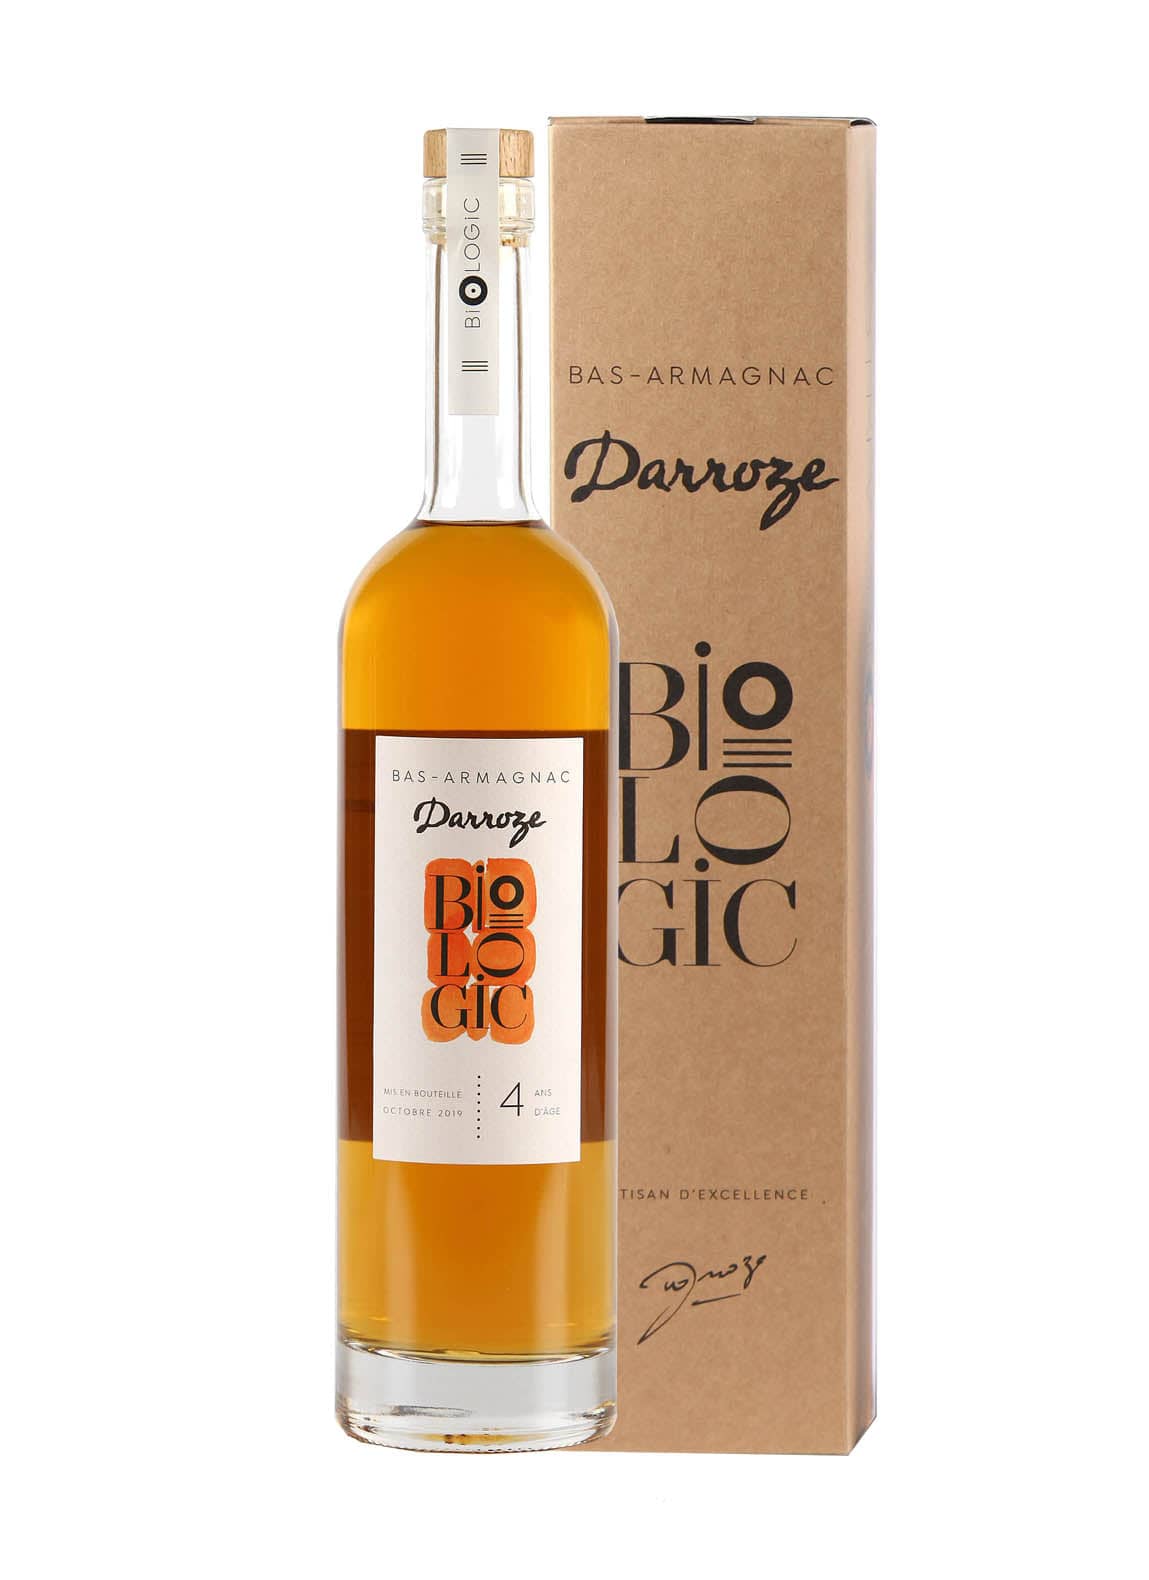 Darroze 4 Year Biologic Armagnac 47.5% 700ml | Brandy | Shop online at Spirits of France